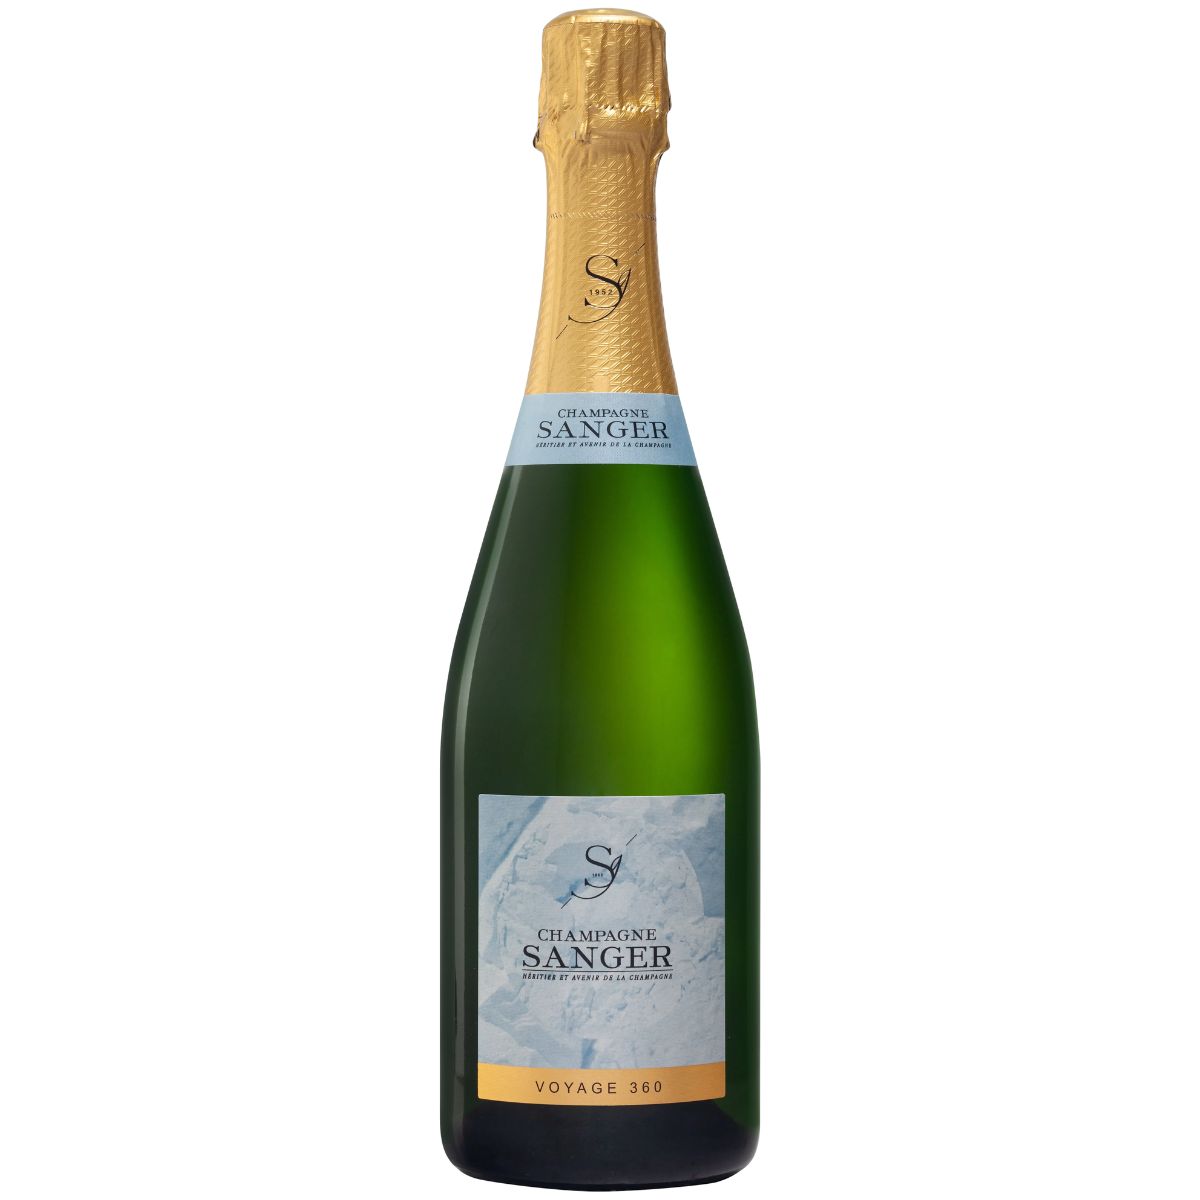 Champagne Sanger - Voyage 360